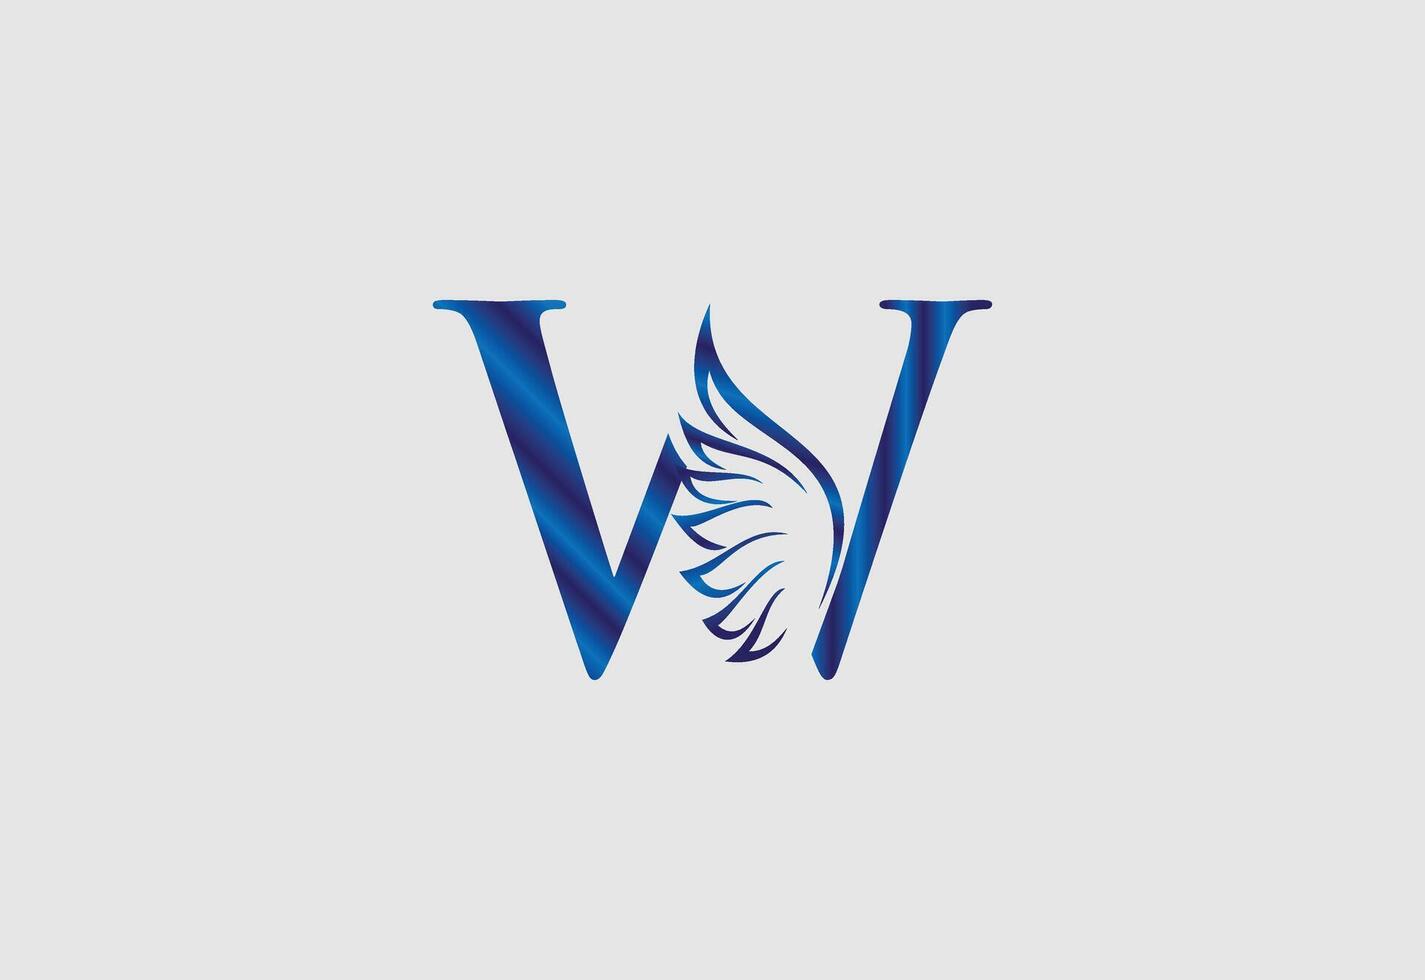 W letter logo design and monogram logo design vector